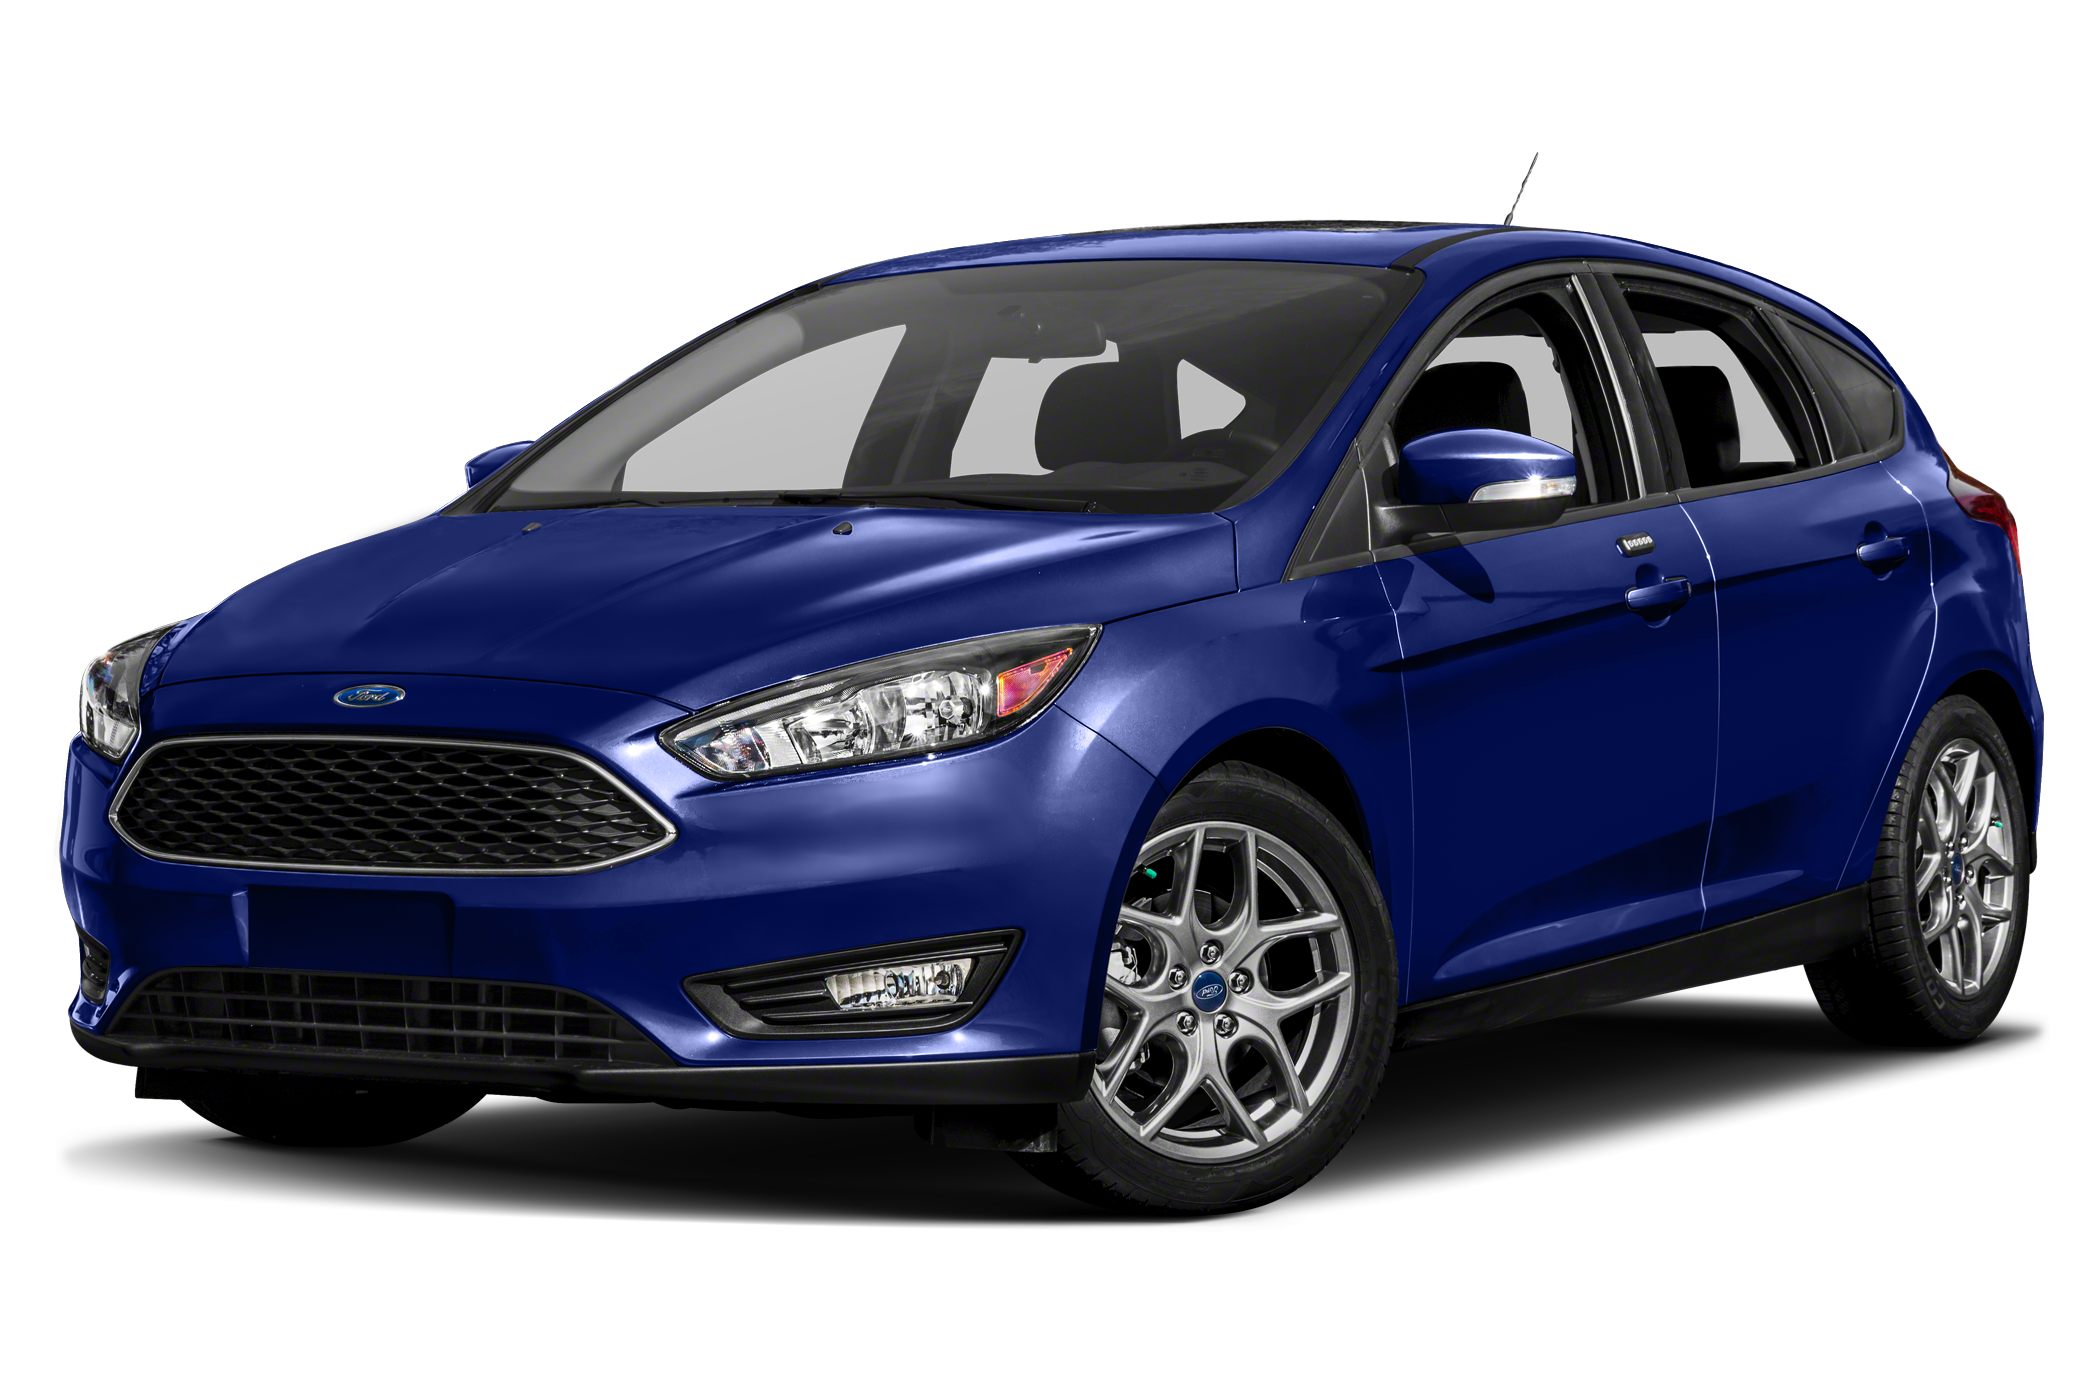 2018 Ford Focus Se 4dr Hatchback Specs And Prices